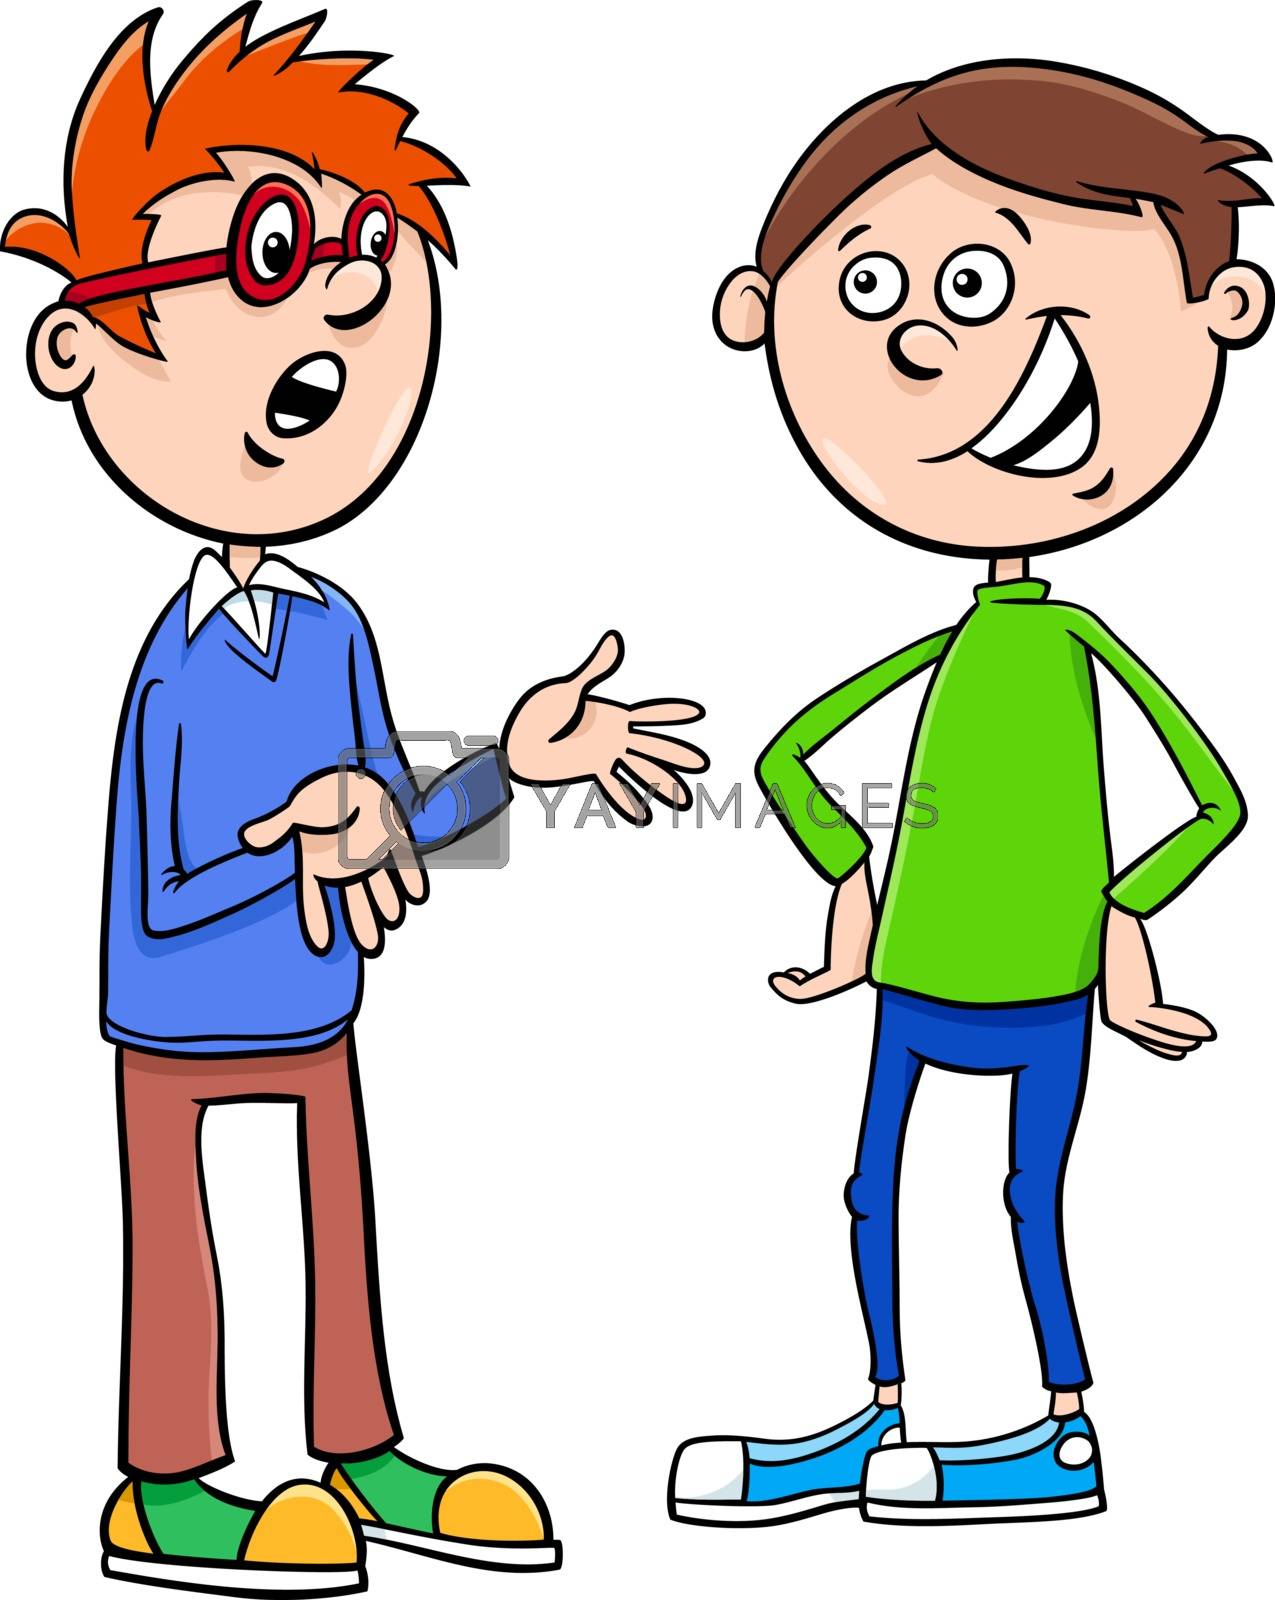 Royalty free image of boys kid characters talking cartoon illustration by izakowski